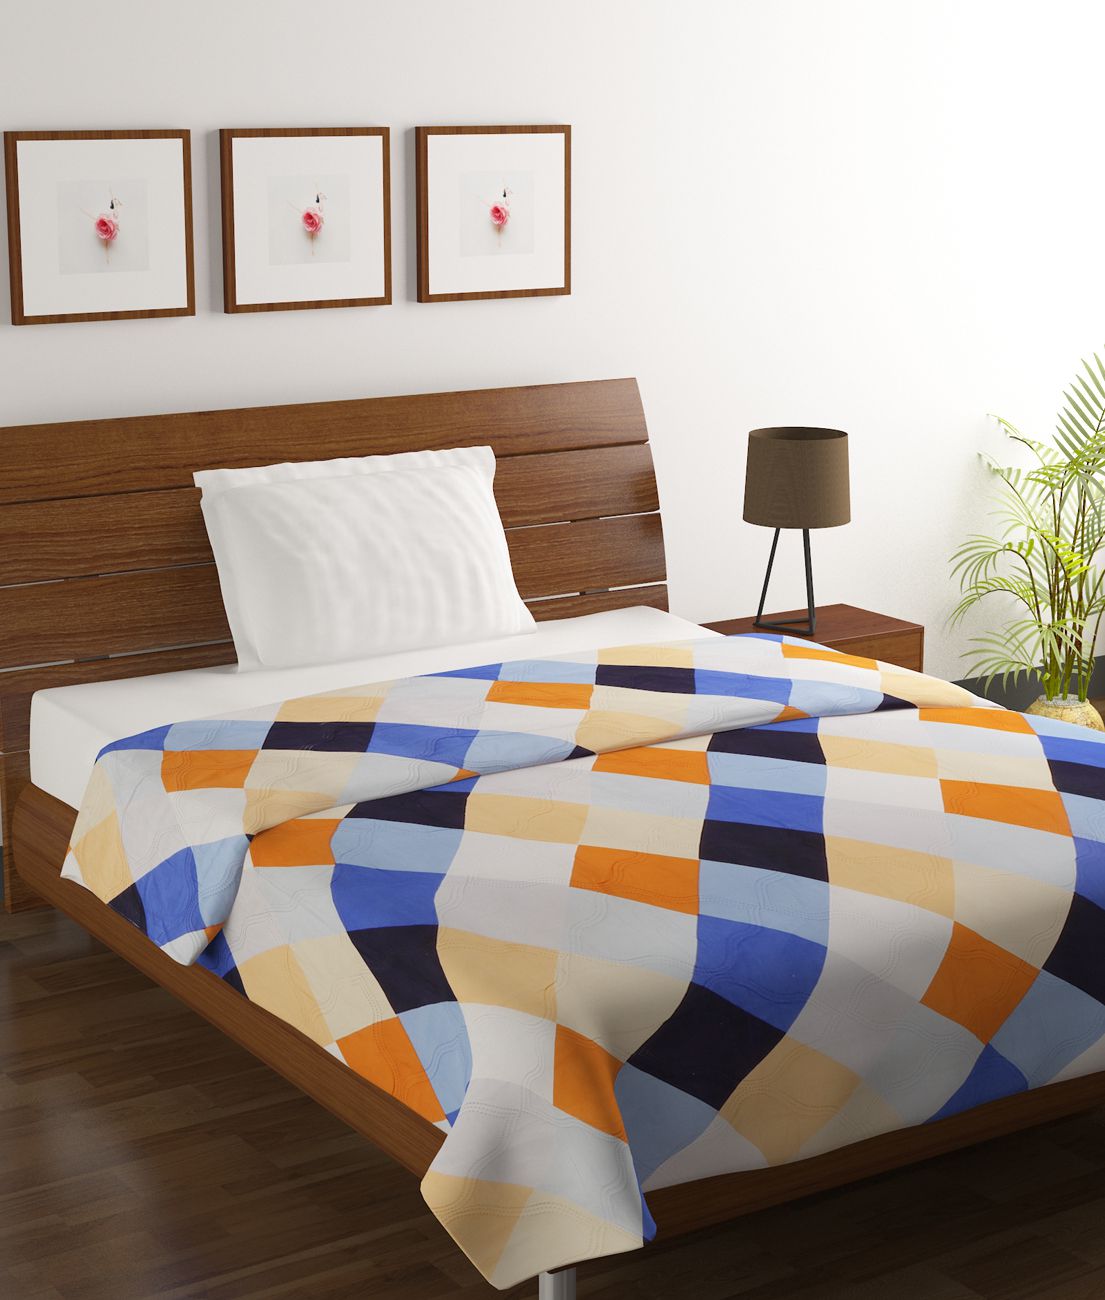     			HOMETALES Microfiber Geometric Print Single Comforter ( 150 x 210 cm ) Pack of 1 - Multi Colour